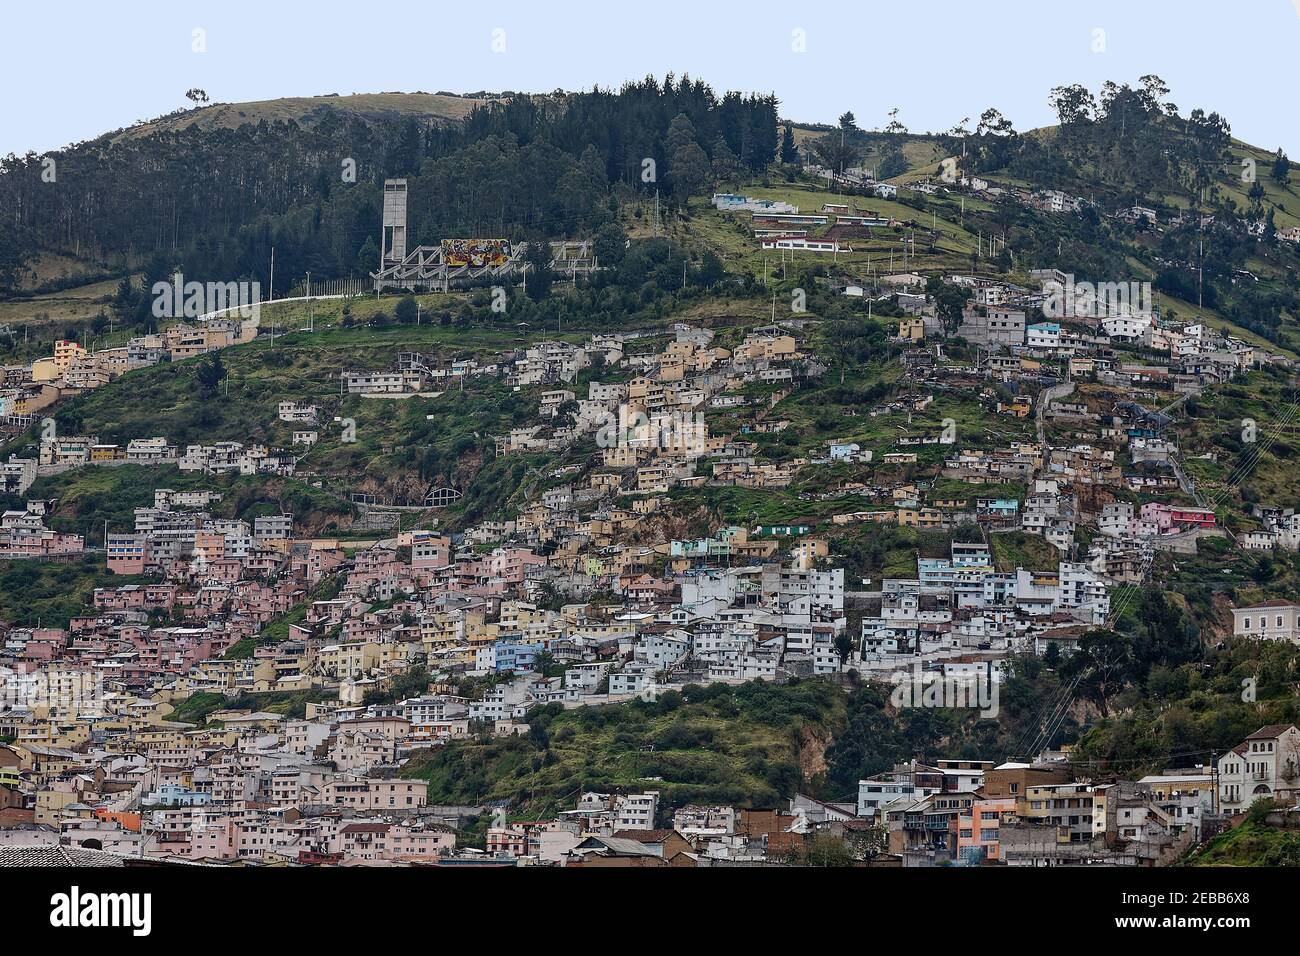 Stadtbild, steiler Hang, Gebäude, dicht beieinander, mehrfarbig, Gras, Bäume, Dämmerung, Südamerika, Quito, Ecuador Stockfoto